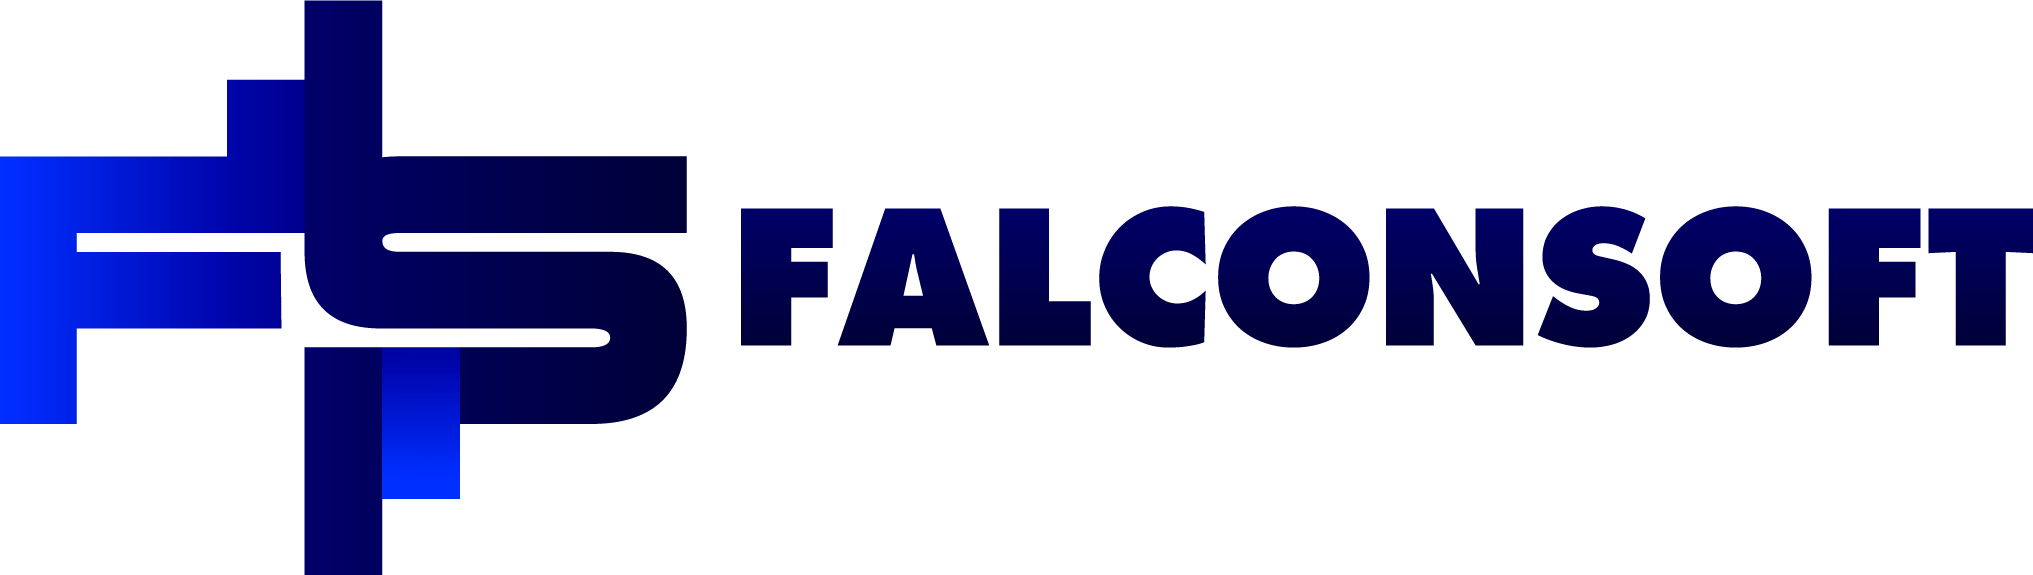 Falconsoft-logo (1)